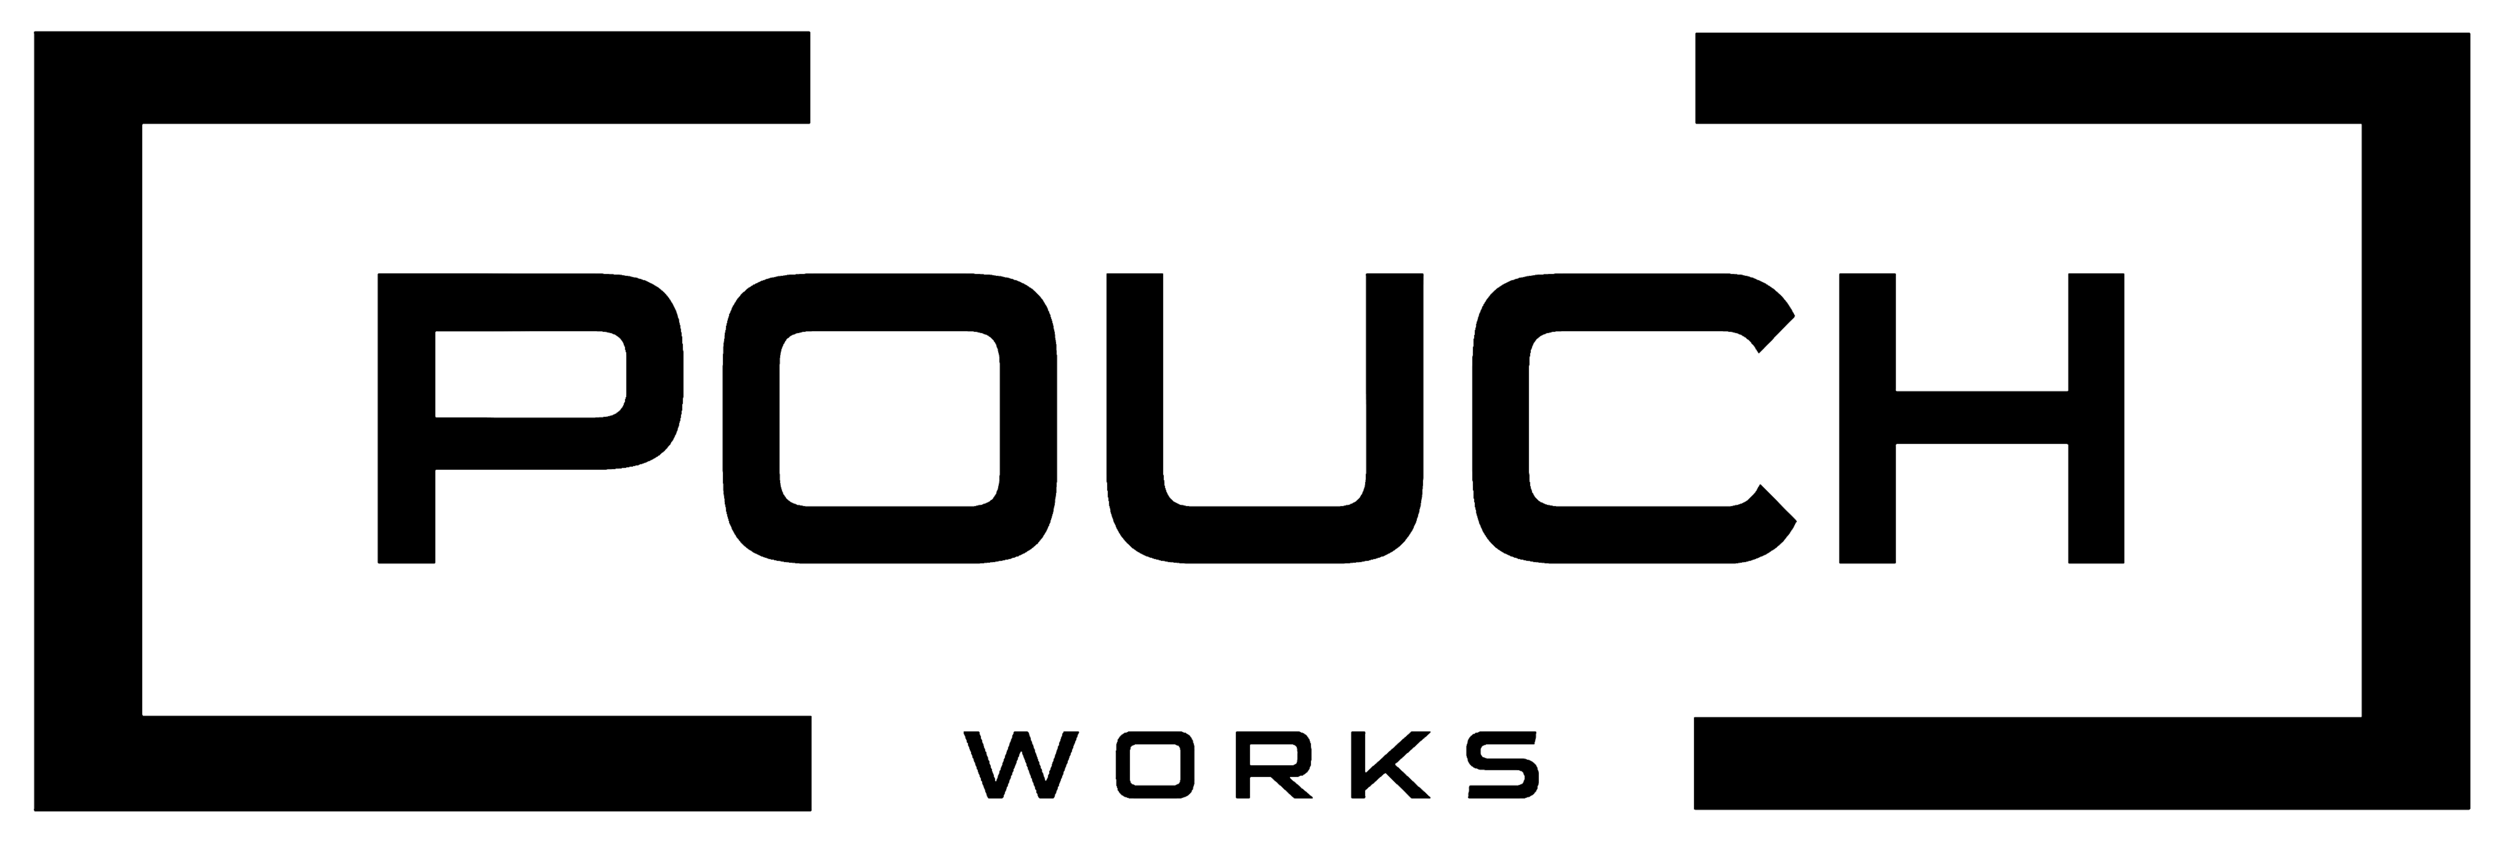 Logo Black Small.png